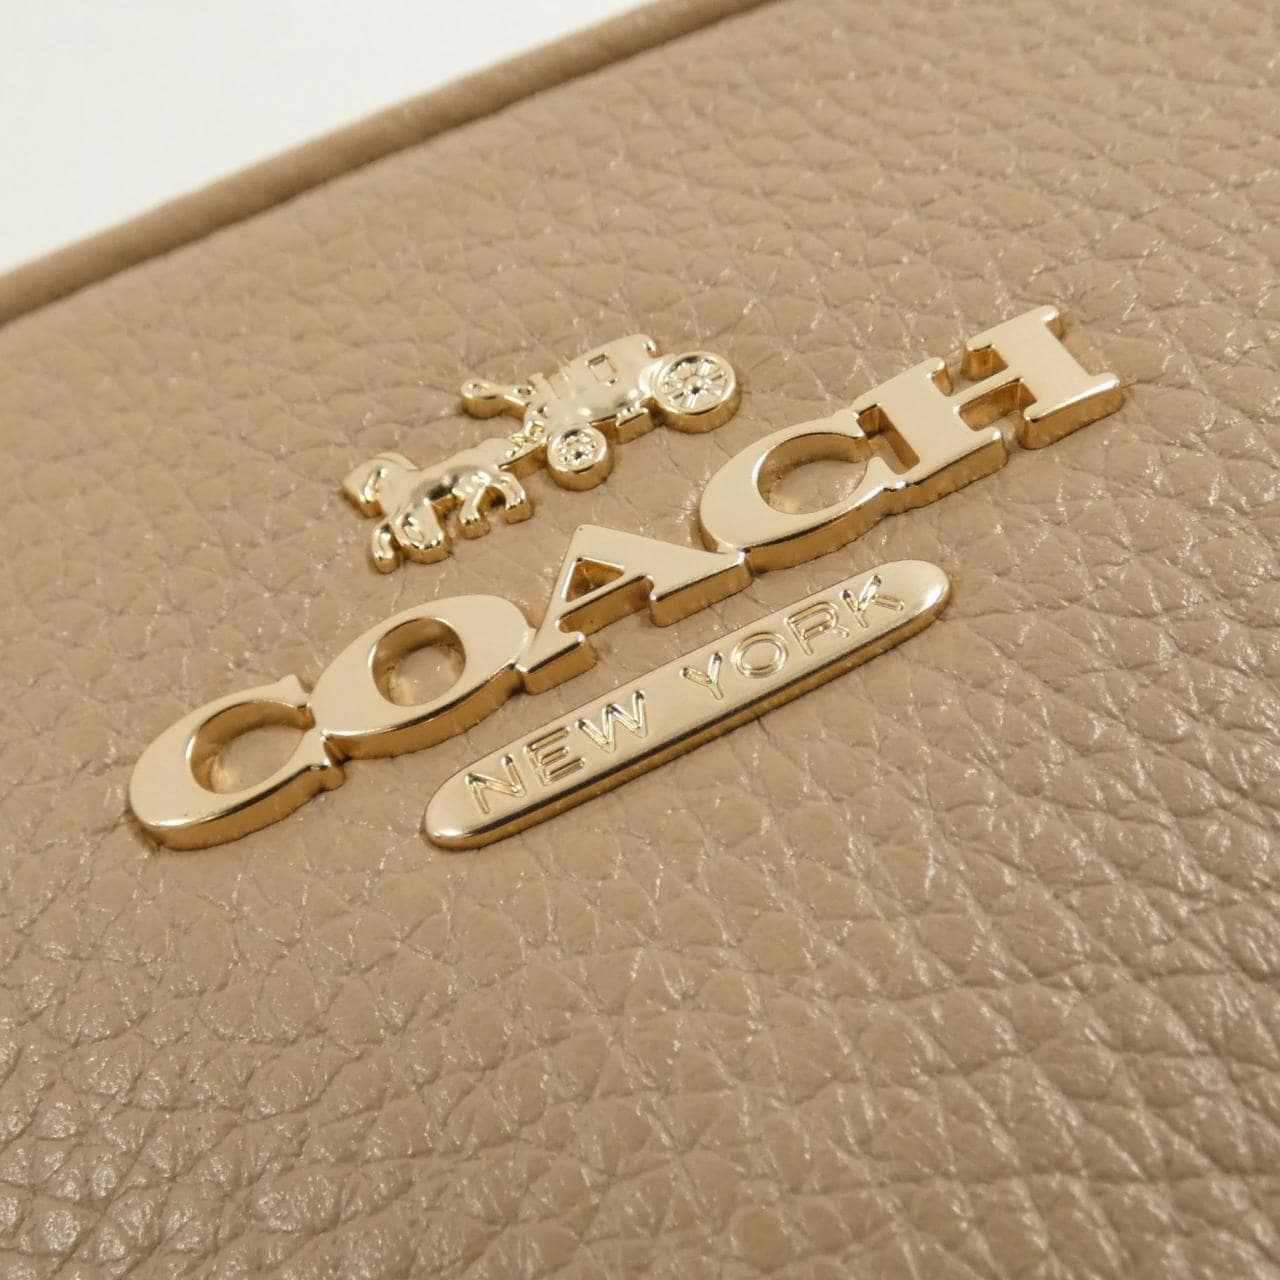 [BRAND NEW] Coach CA069 Shoulder Bag